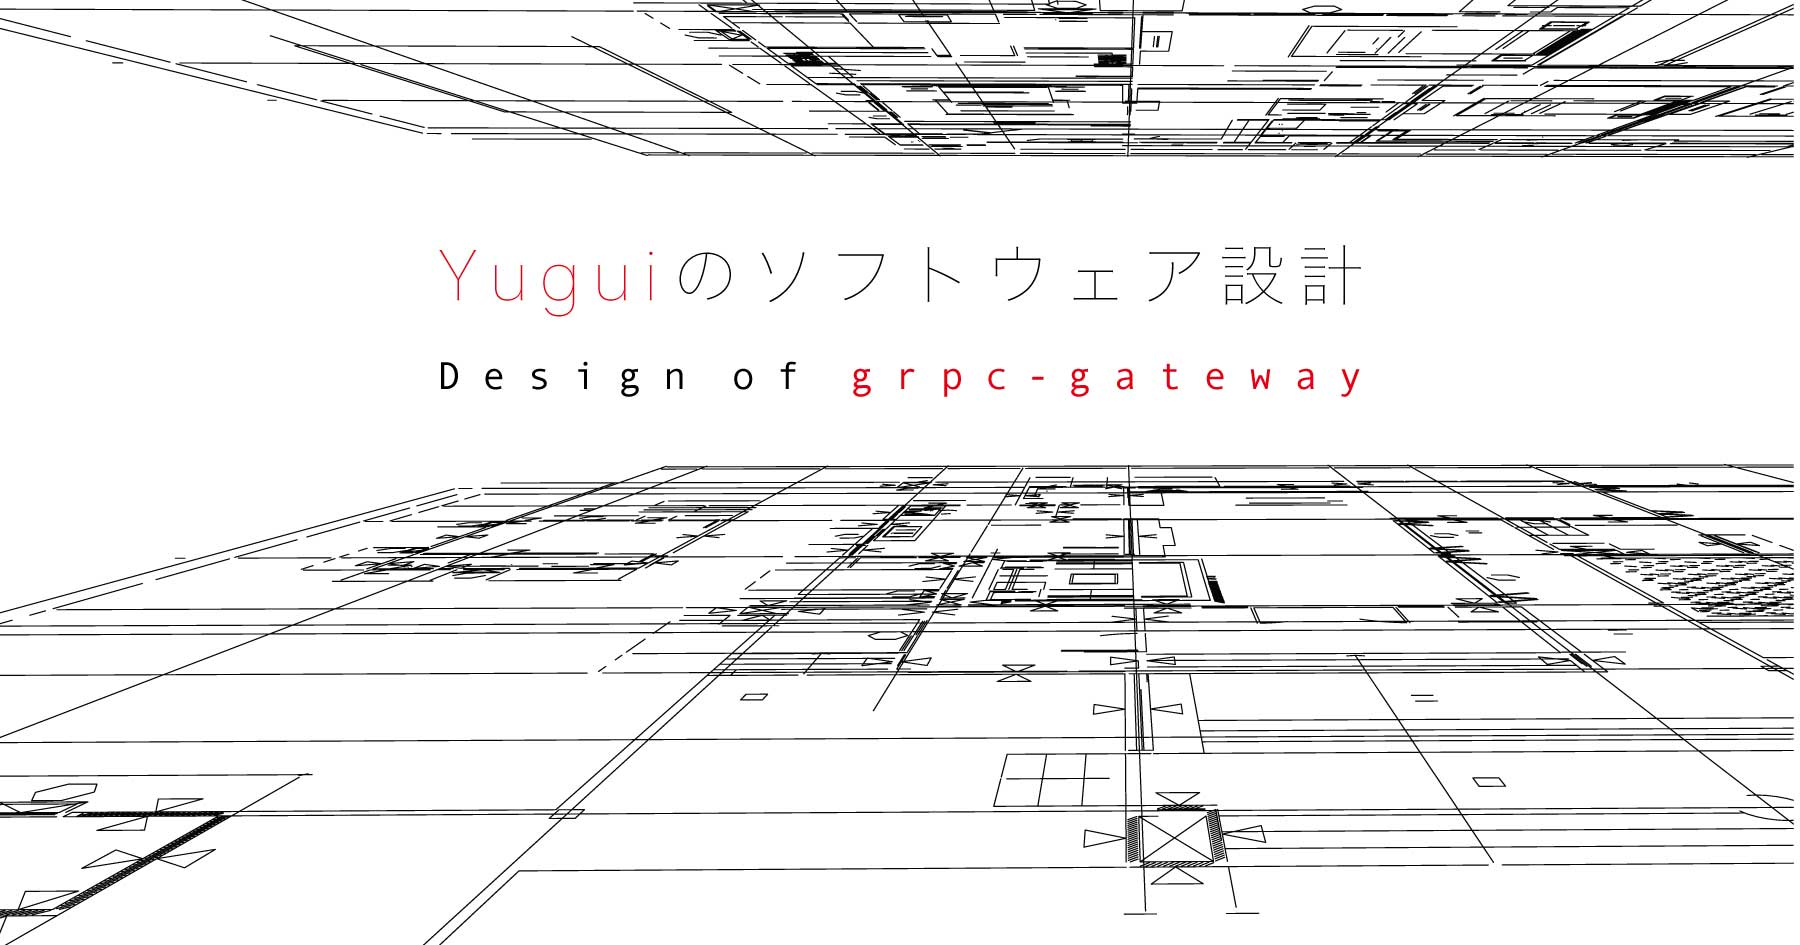 grpc-gatewayの開発に学ぶ、ソフトウェアの設計手法～Yuguiが定めた、2つの基本設計方針